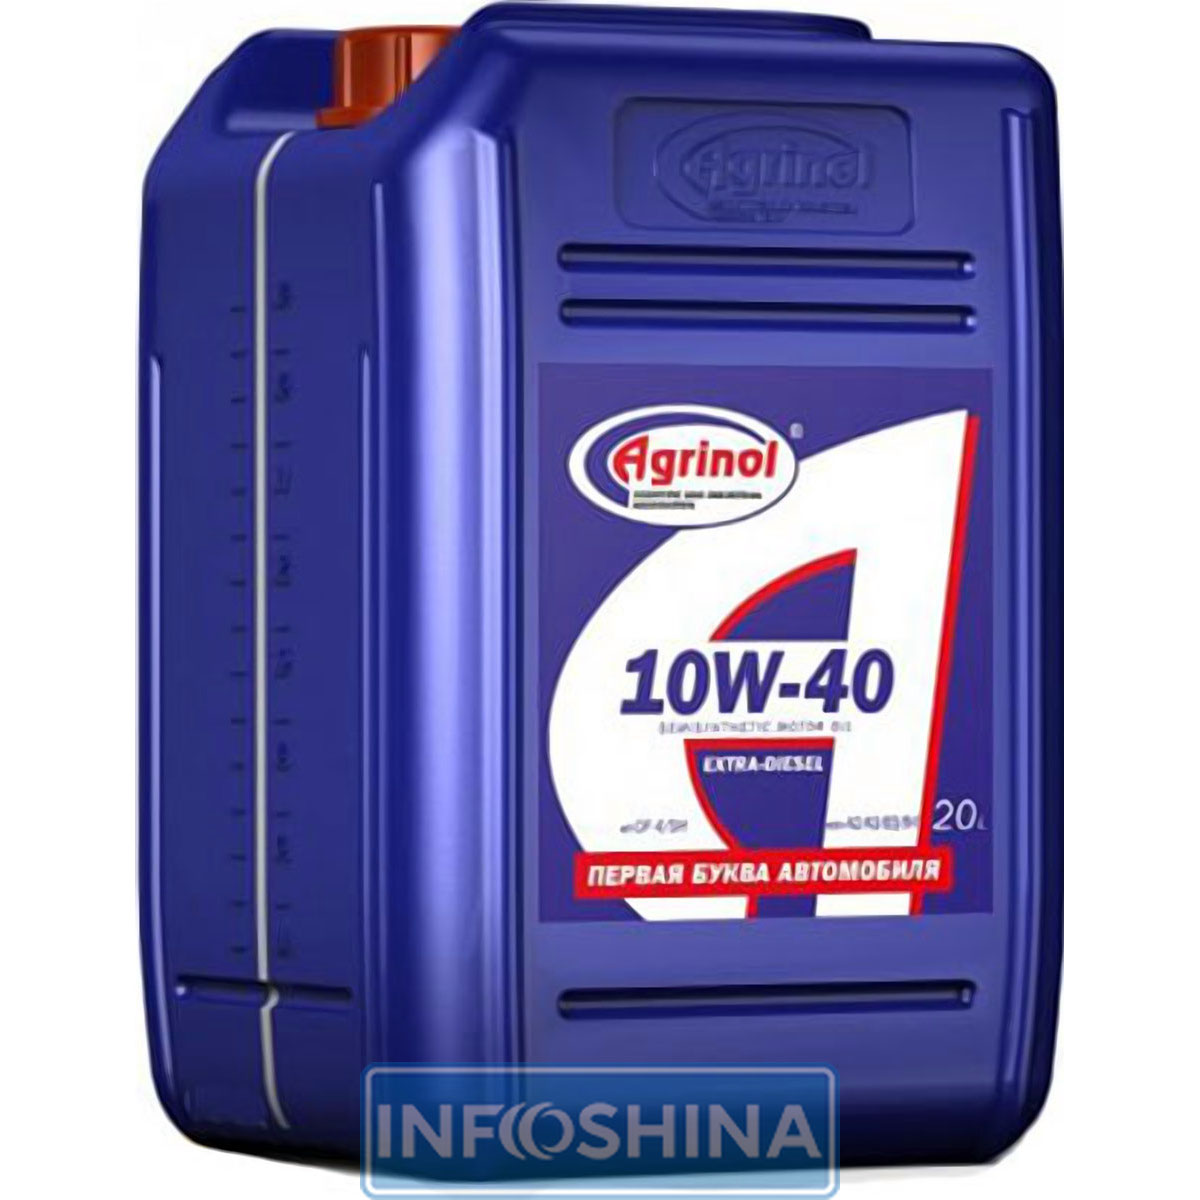 Купить масло Agrinol Extra-Diesel 10W-40 CF-4/SH (10л)